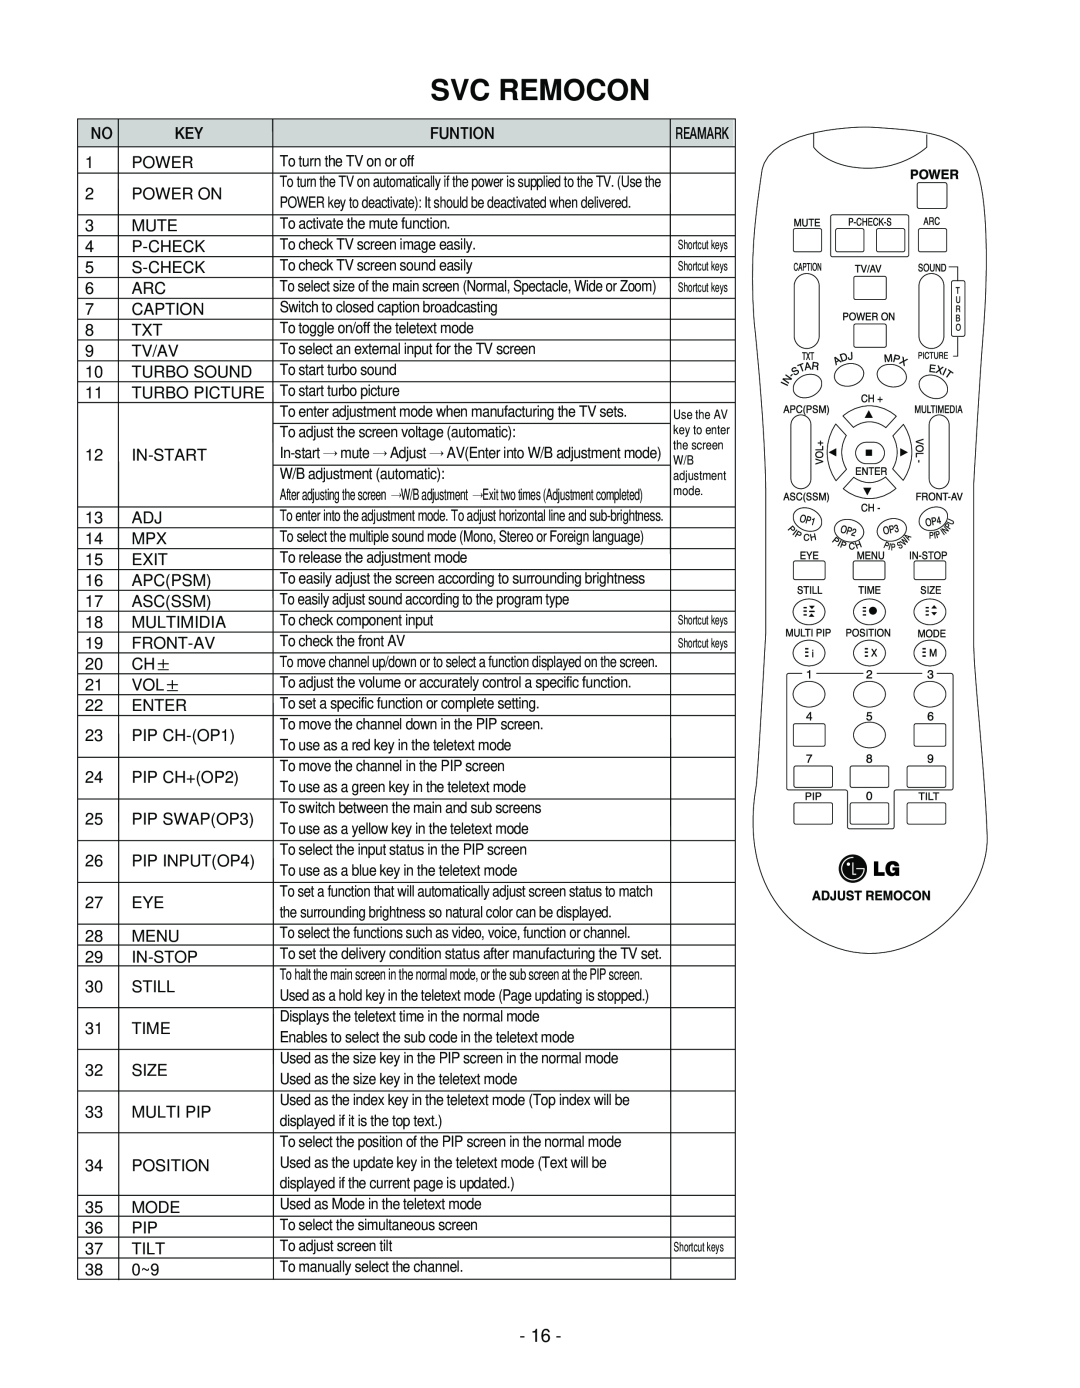 LG Electronics 37LC2D(B), 32LC2D(B), 42LC2D(B) service manual Svc Remocon, Funtion 